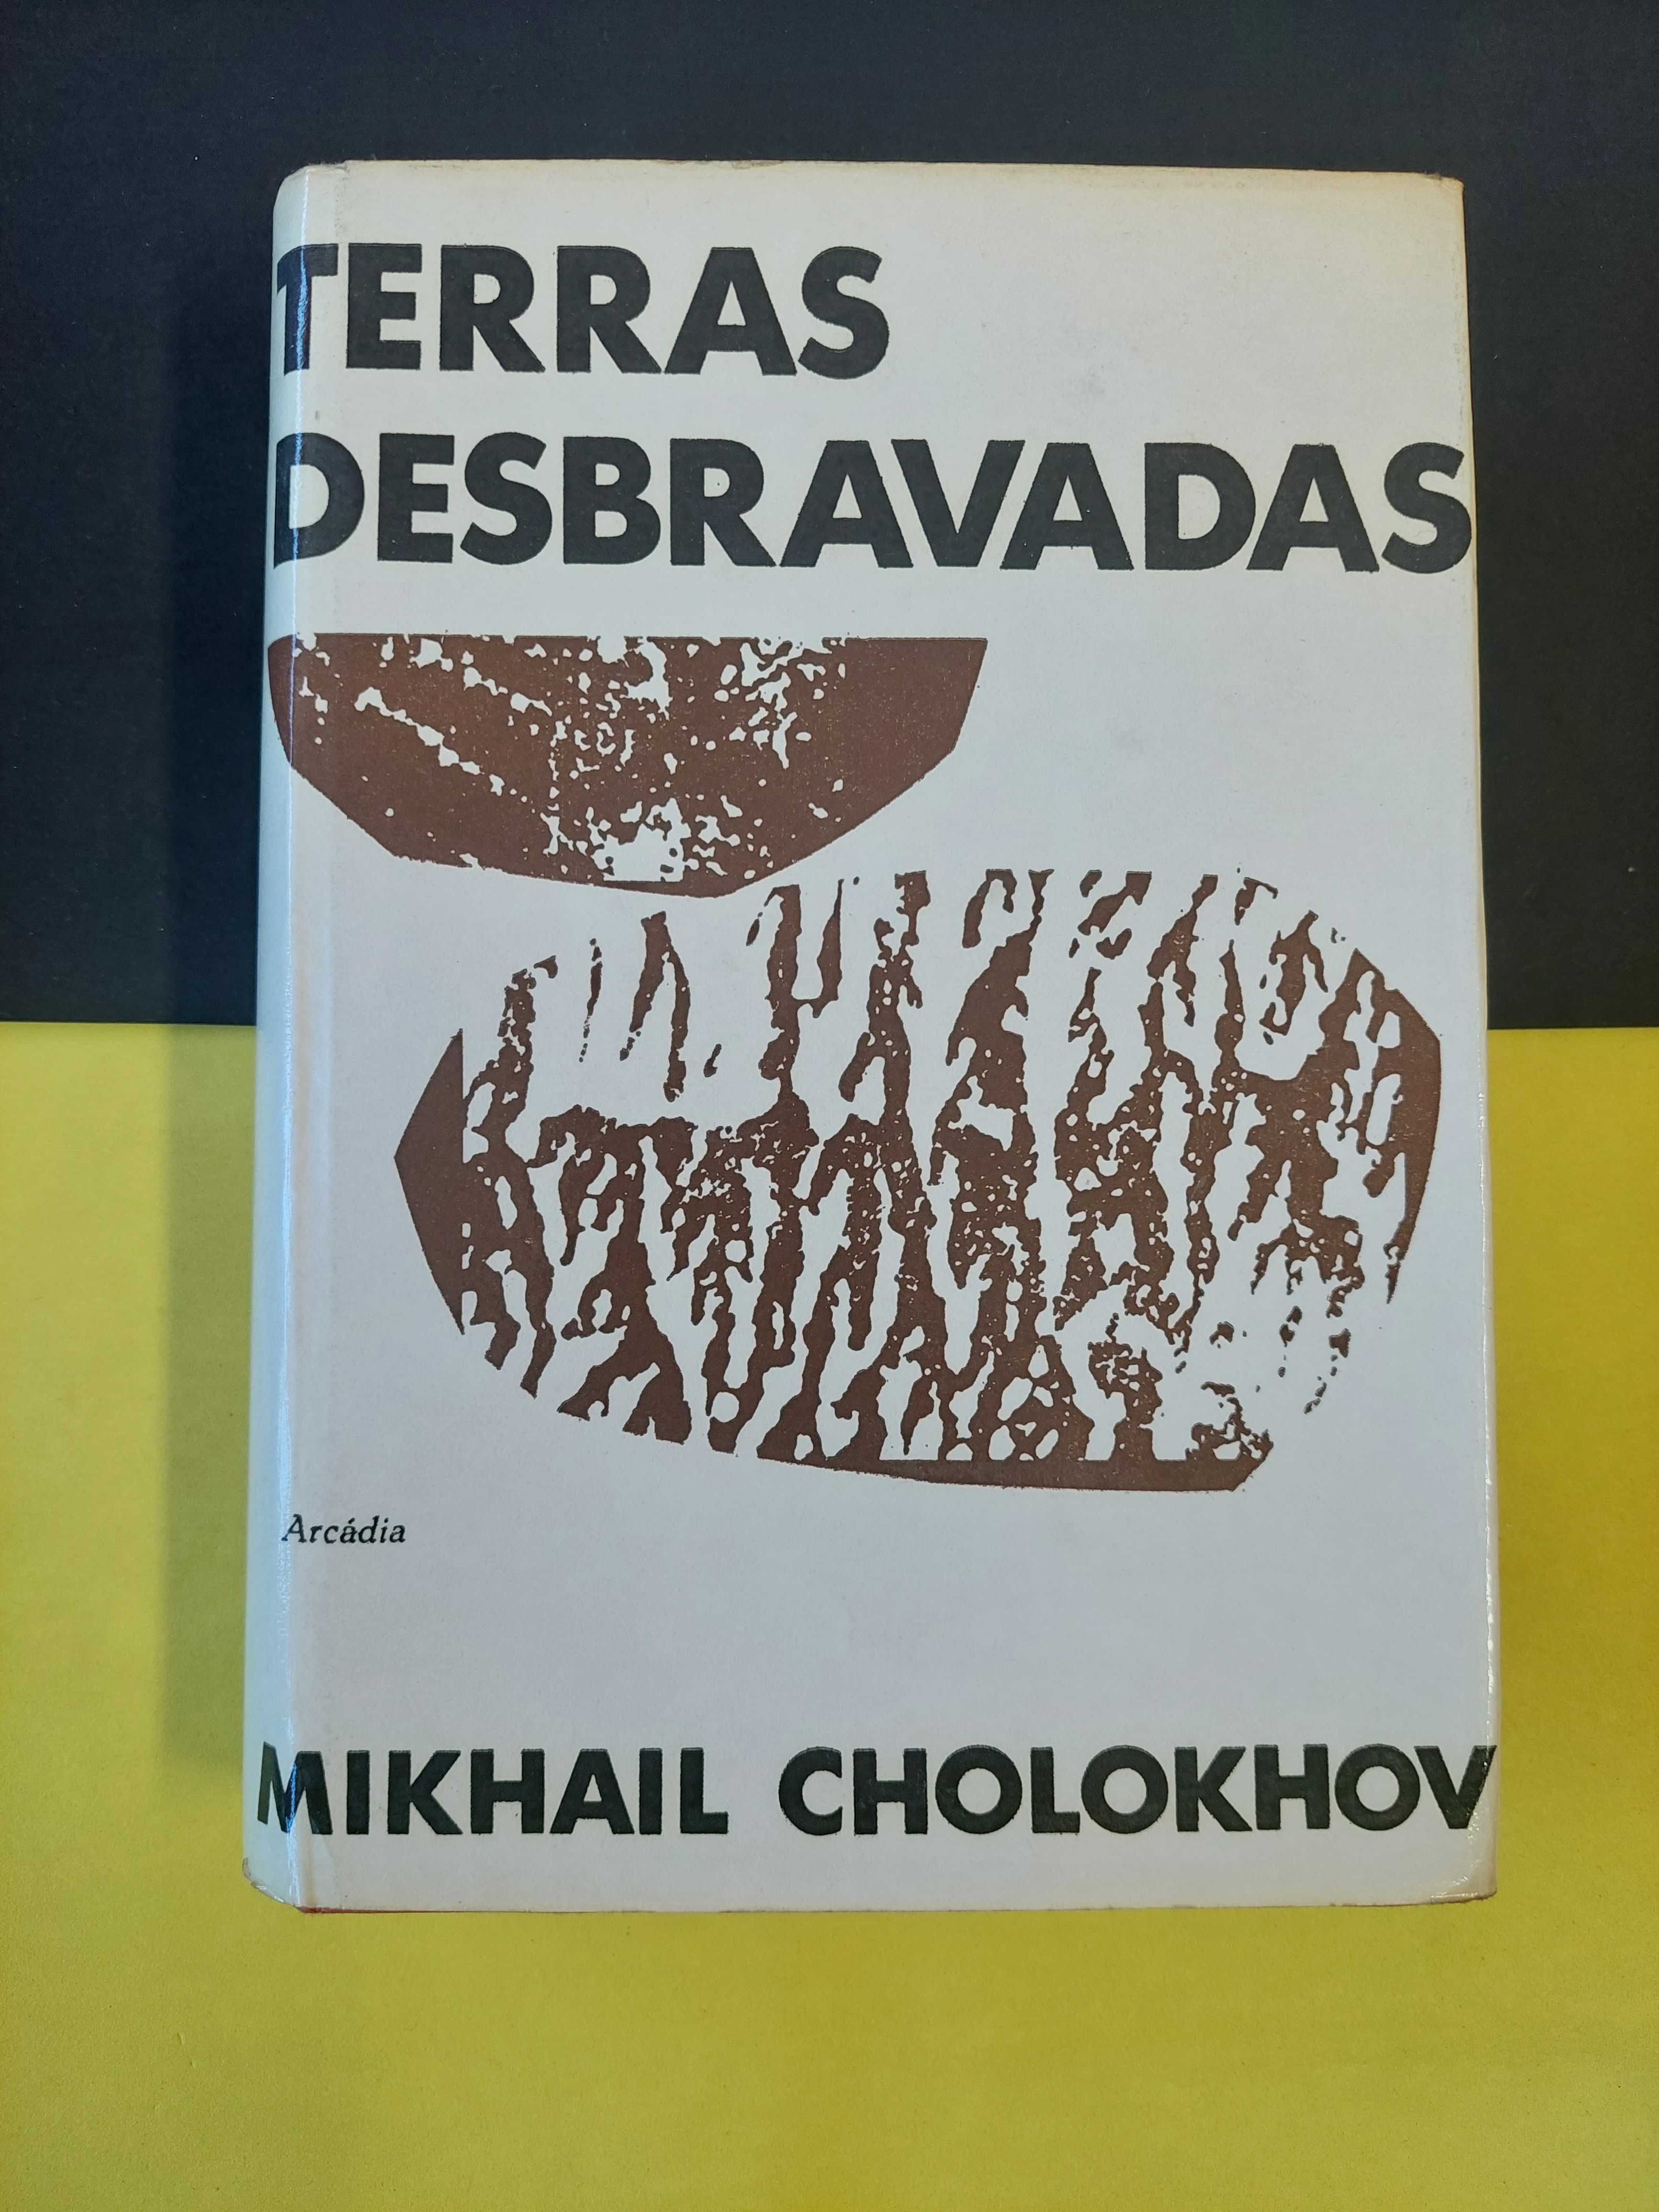 Mikhail Cholokhov - Terras desbravadas, 2 volumes